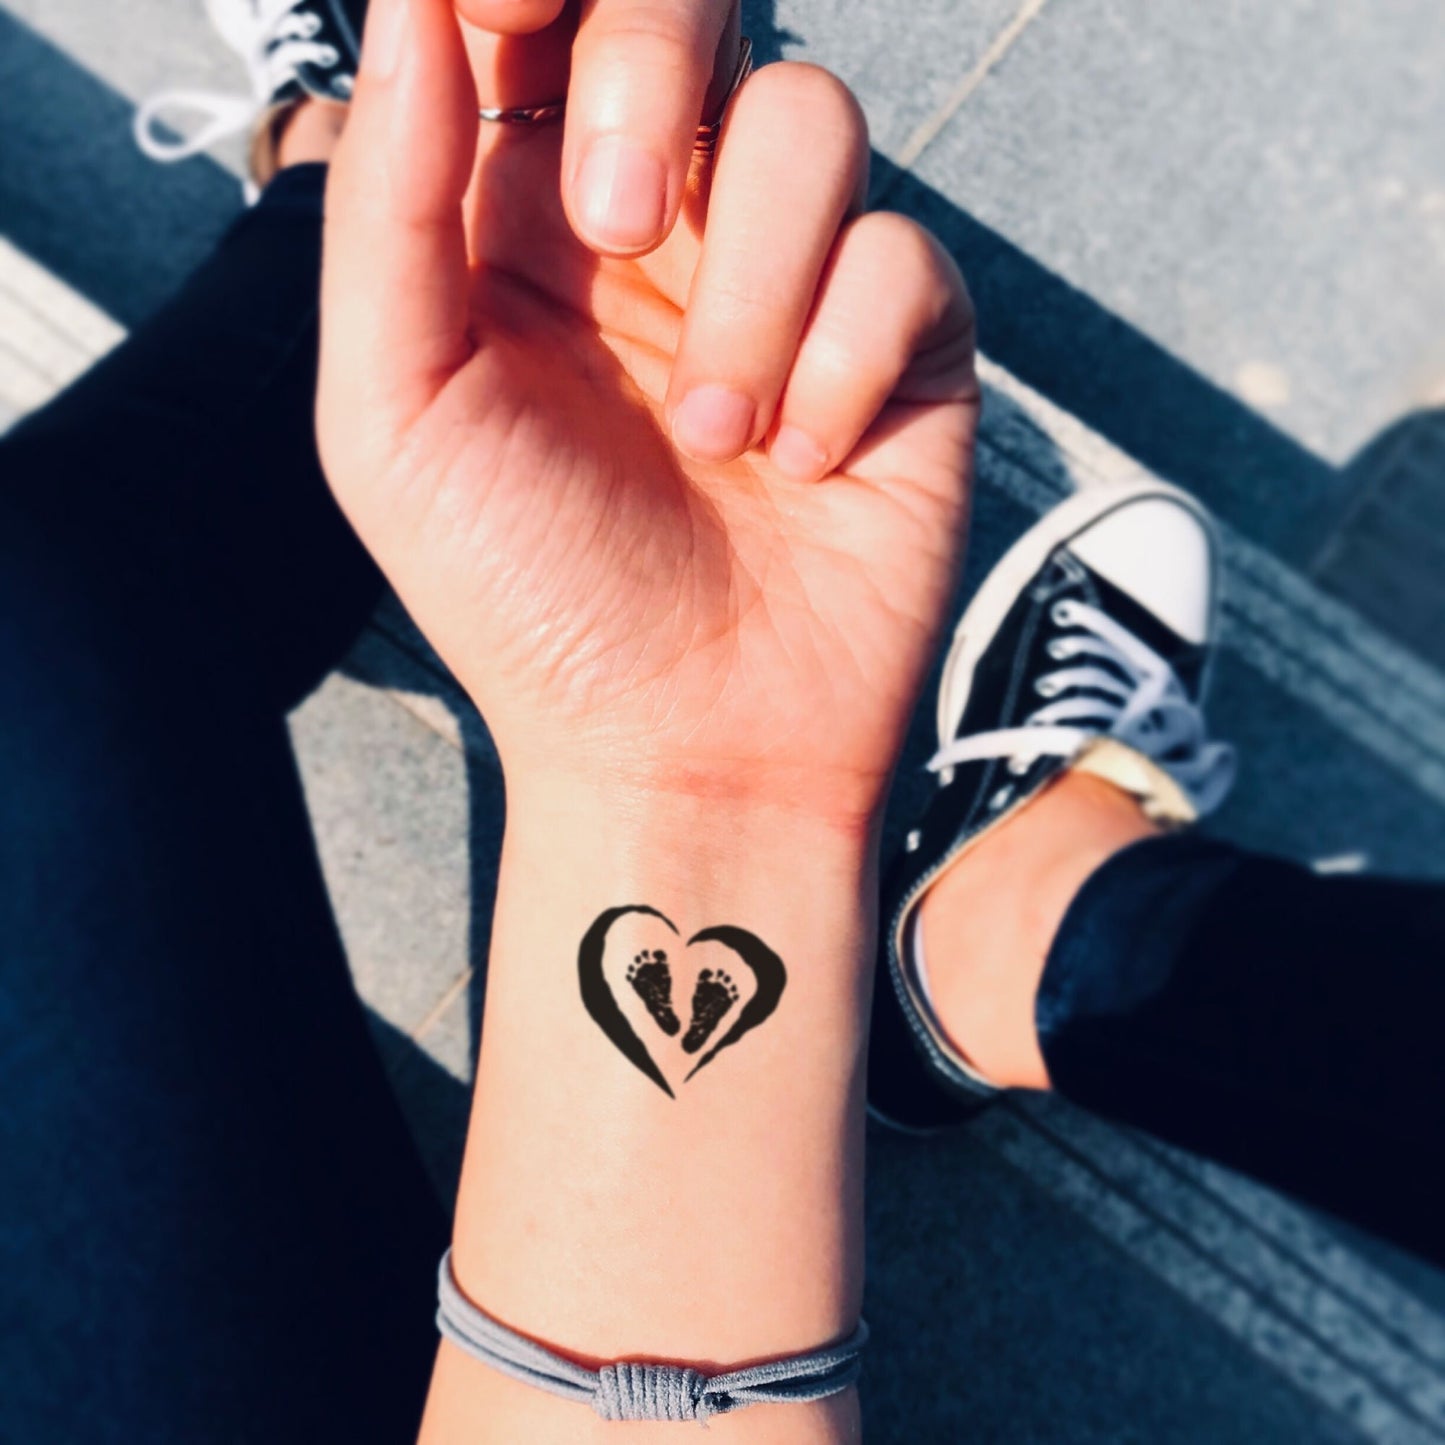 fake small abortion minimalist temporary tattoo sticker design idea on wrist